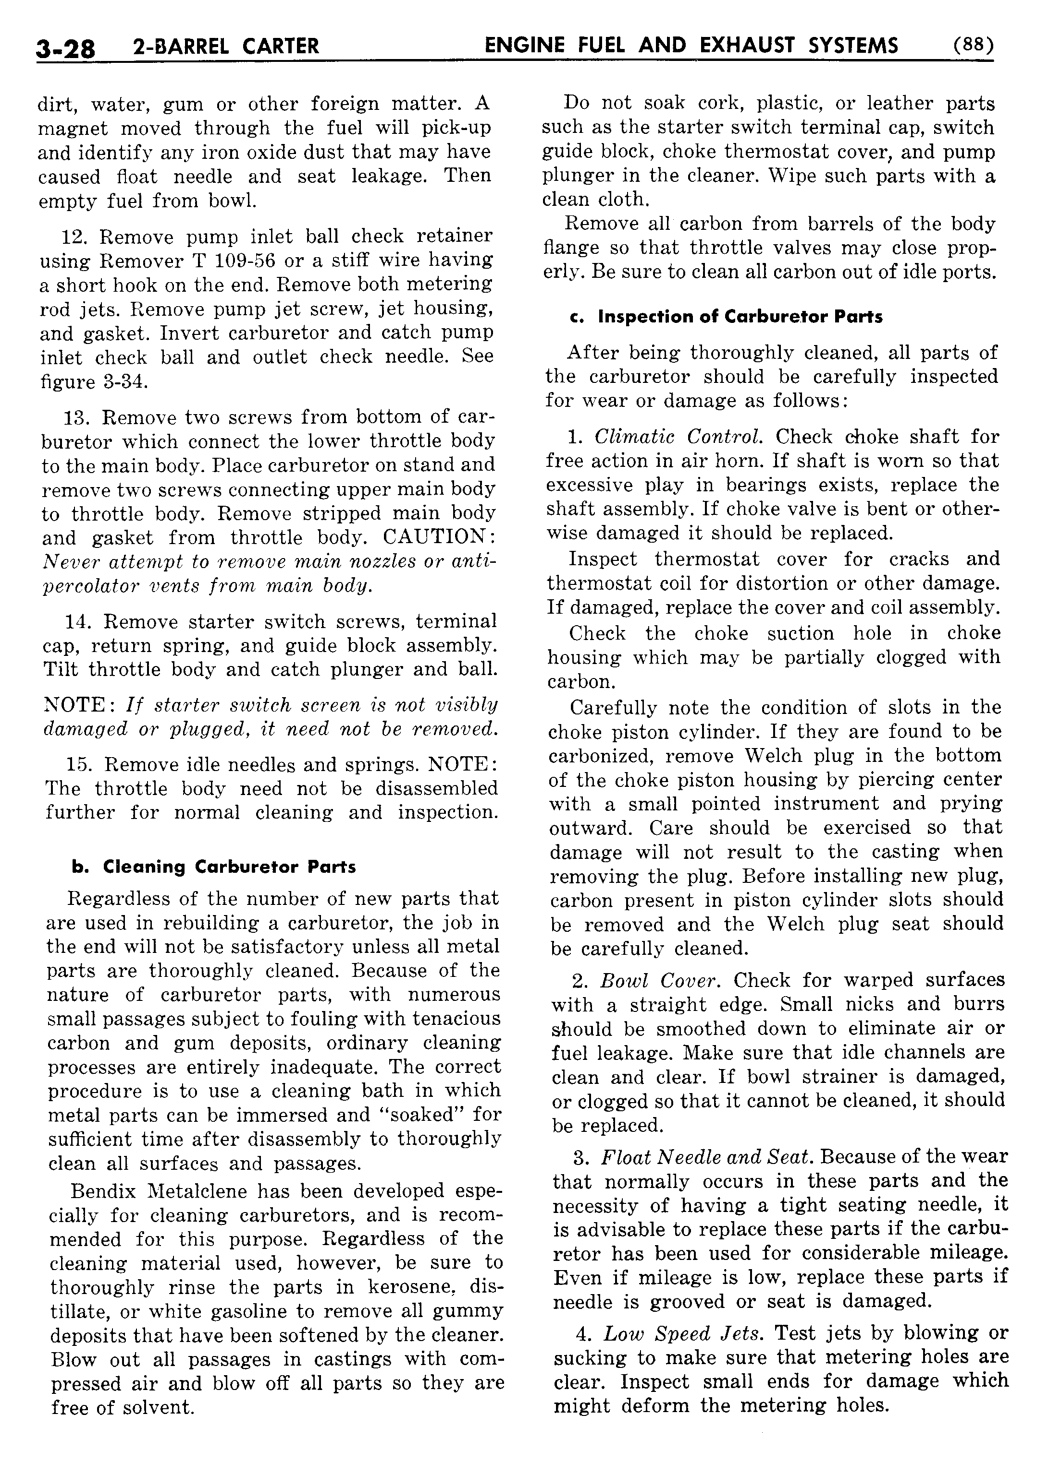 n_04 1956 Buick Shop Manual - Engine Fuel & Exhaust-028-028.jpg